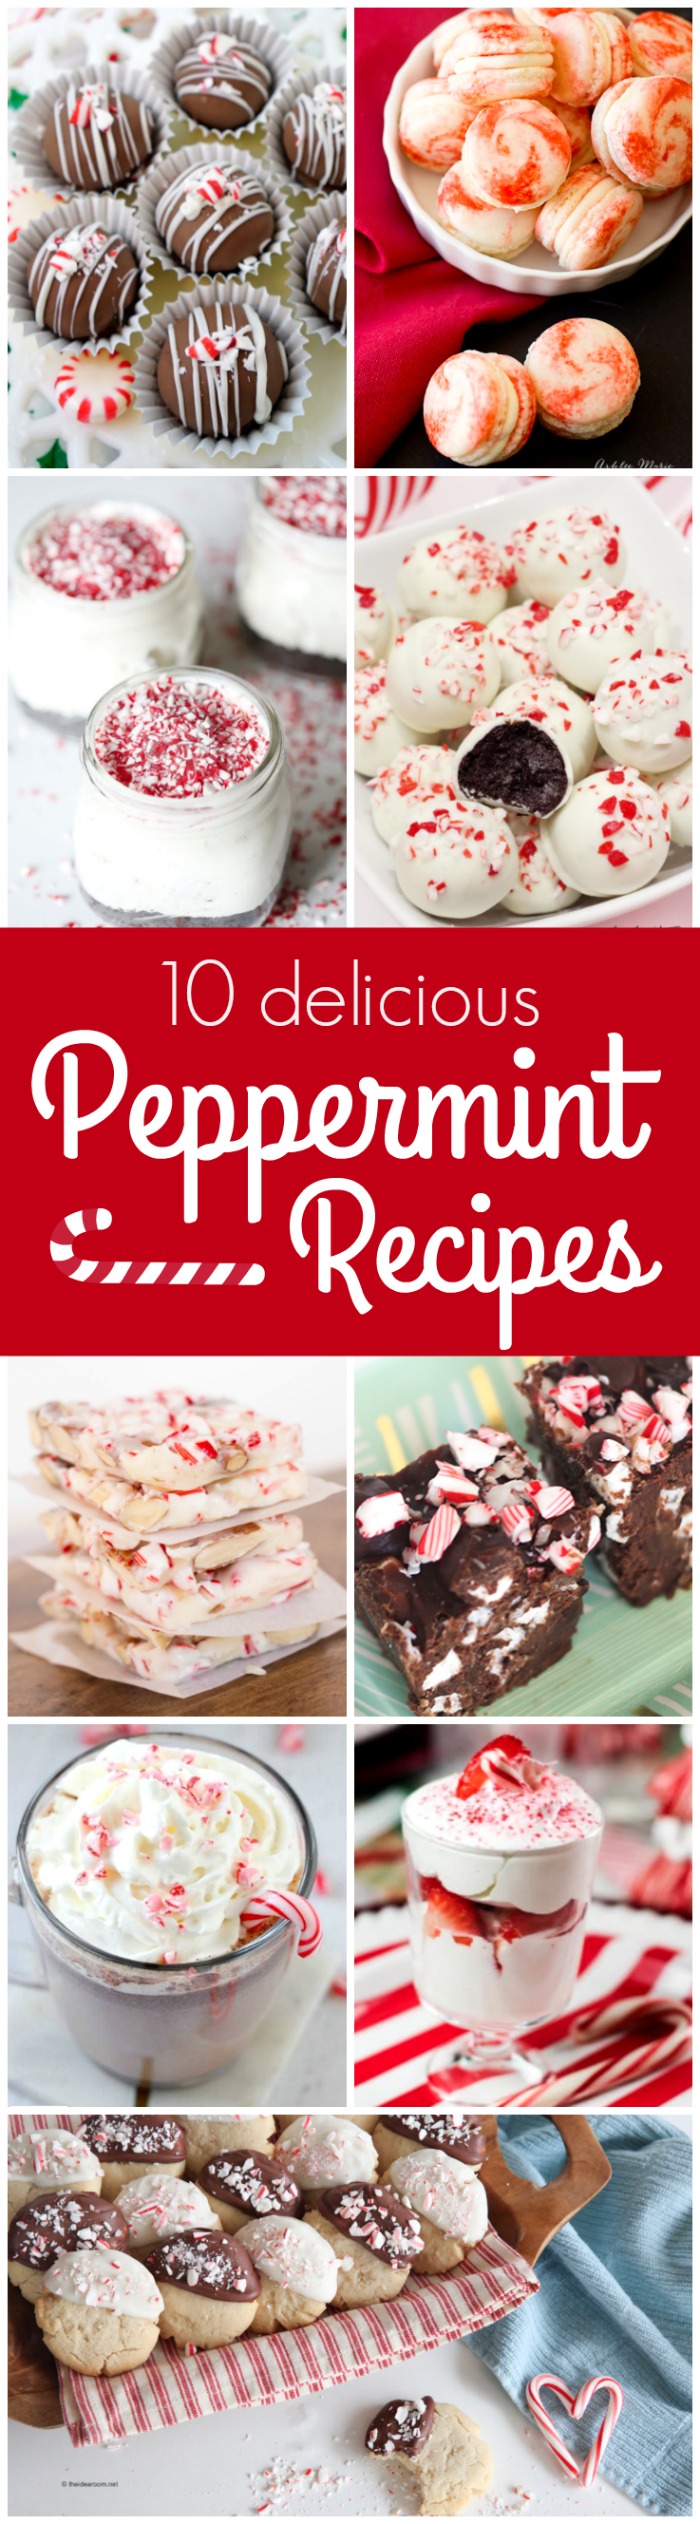 Peppermint Recipes